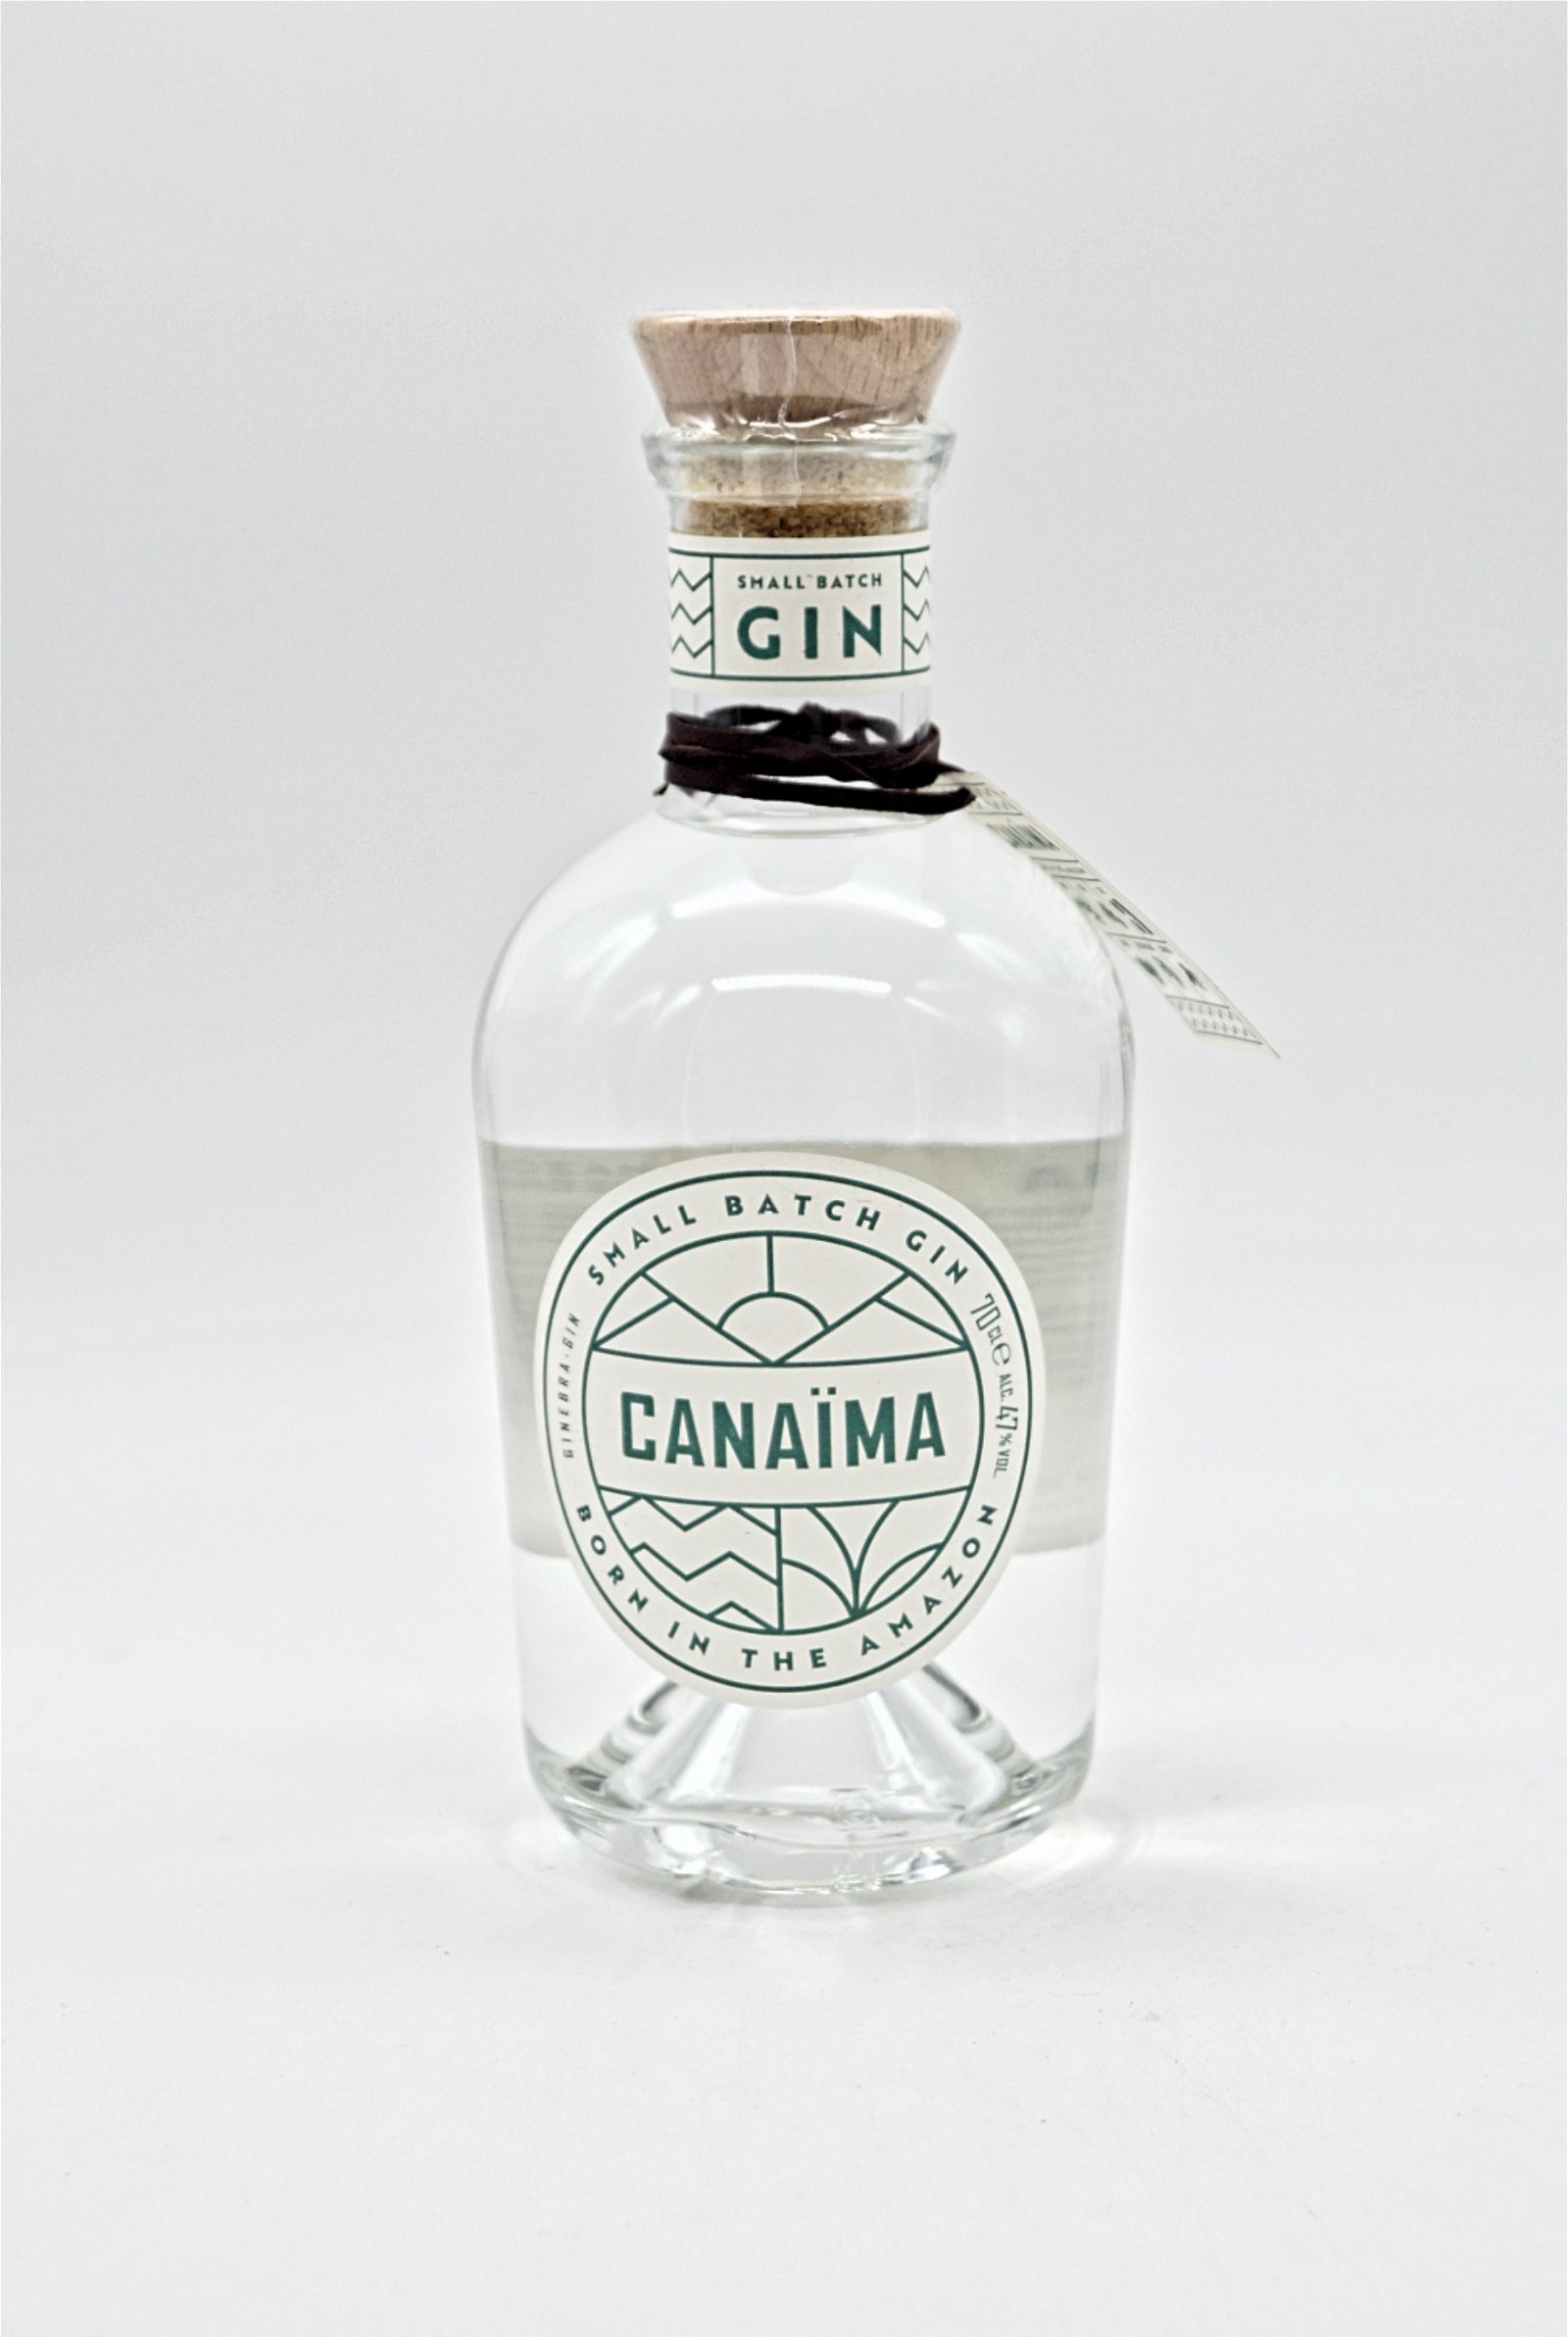 Canaima Small Batch Gin "Born in the Amazon"